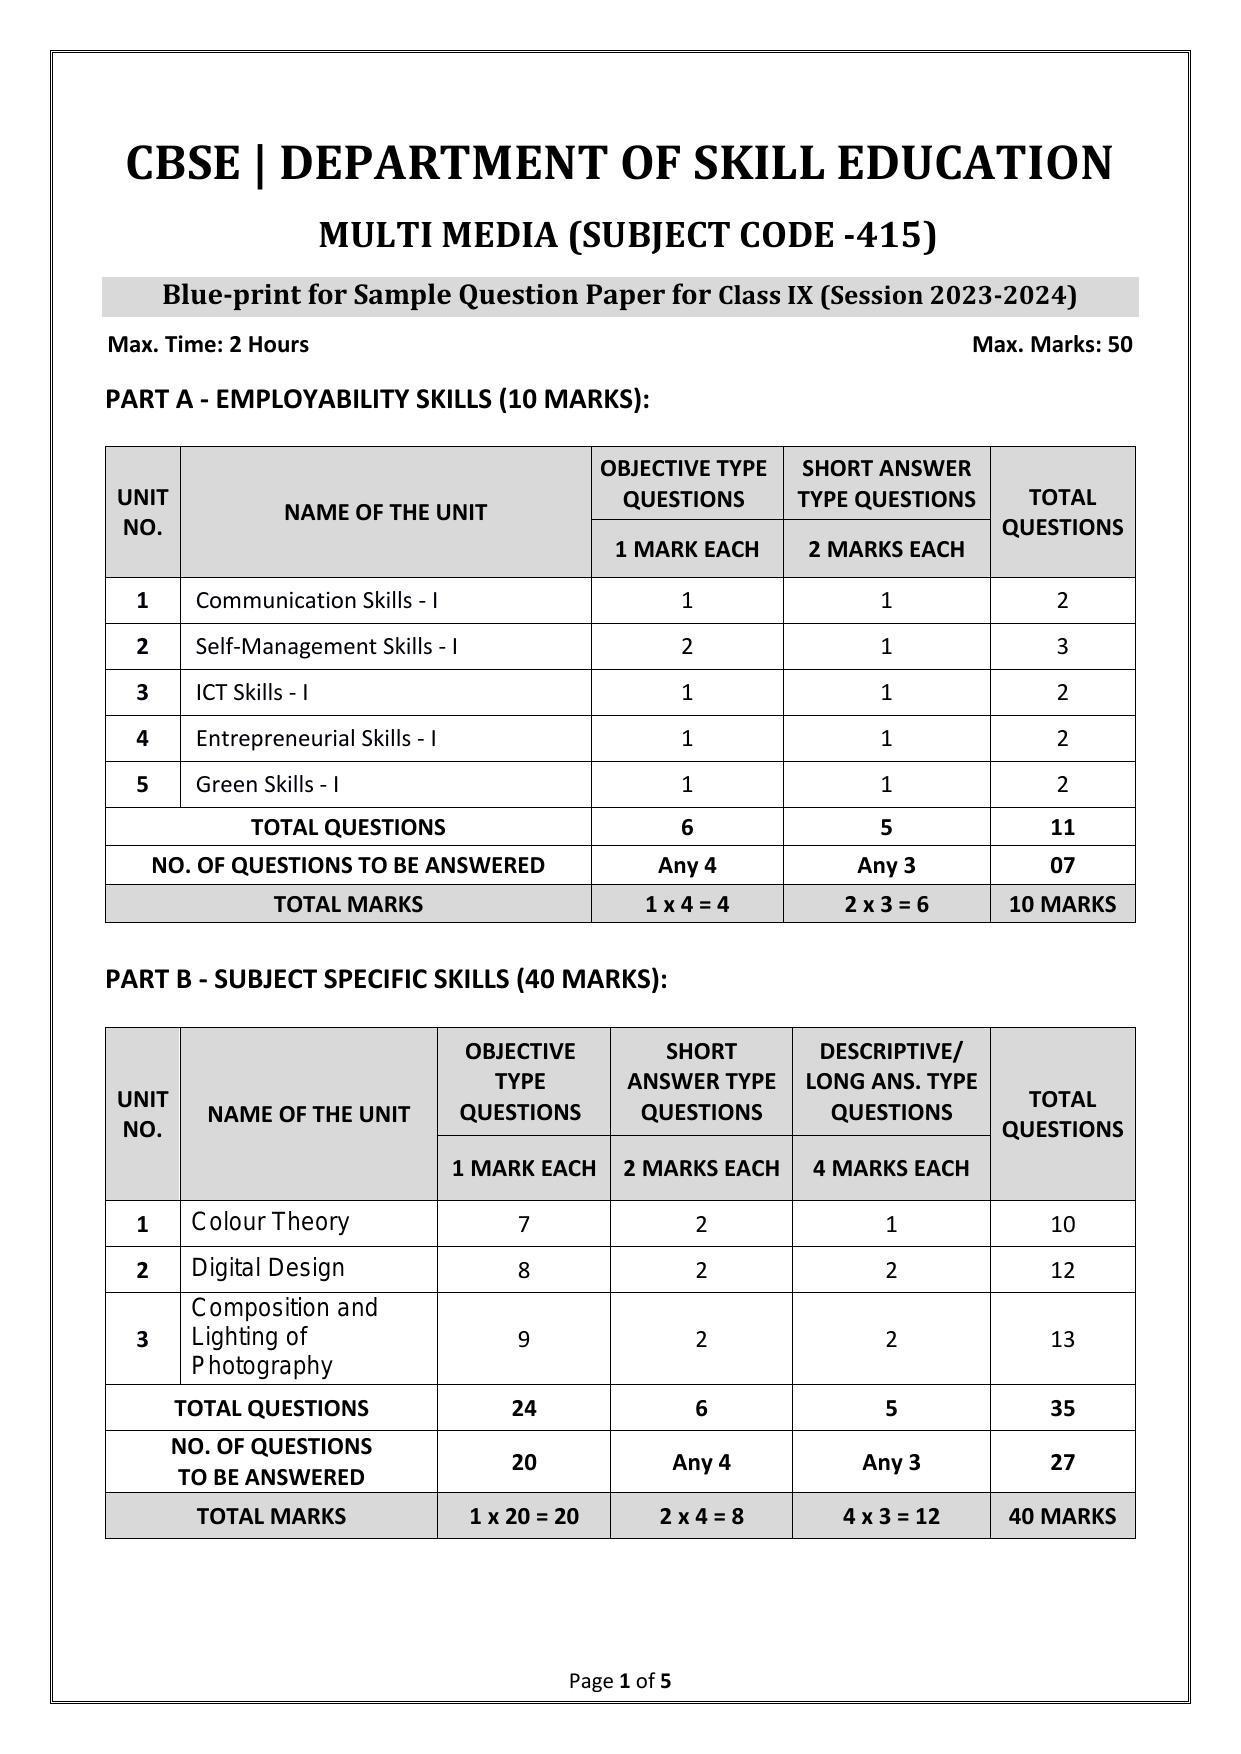 CBSE Class 9 Multi Media Skill Education-Sample Paper 2024 - Page 1